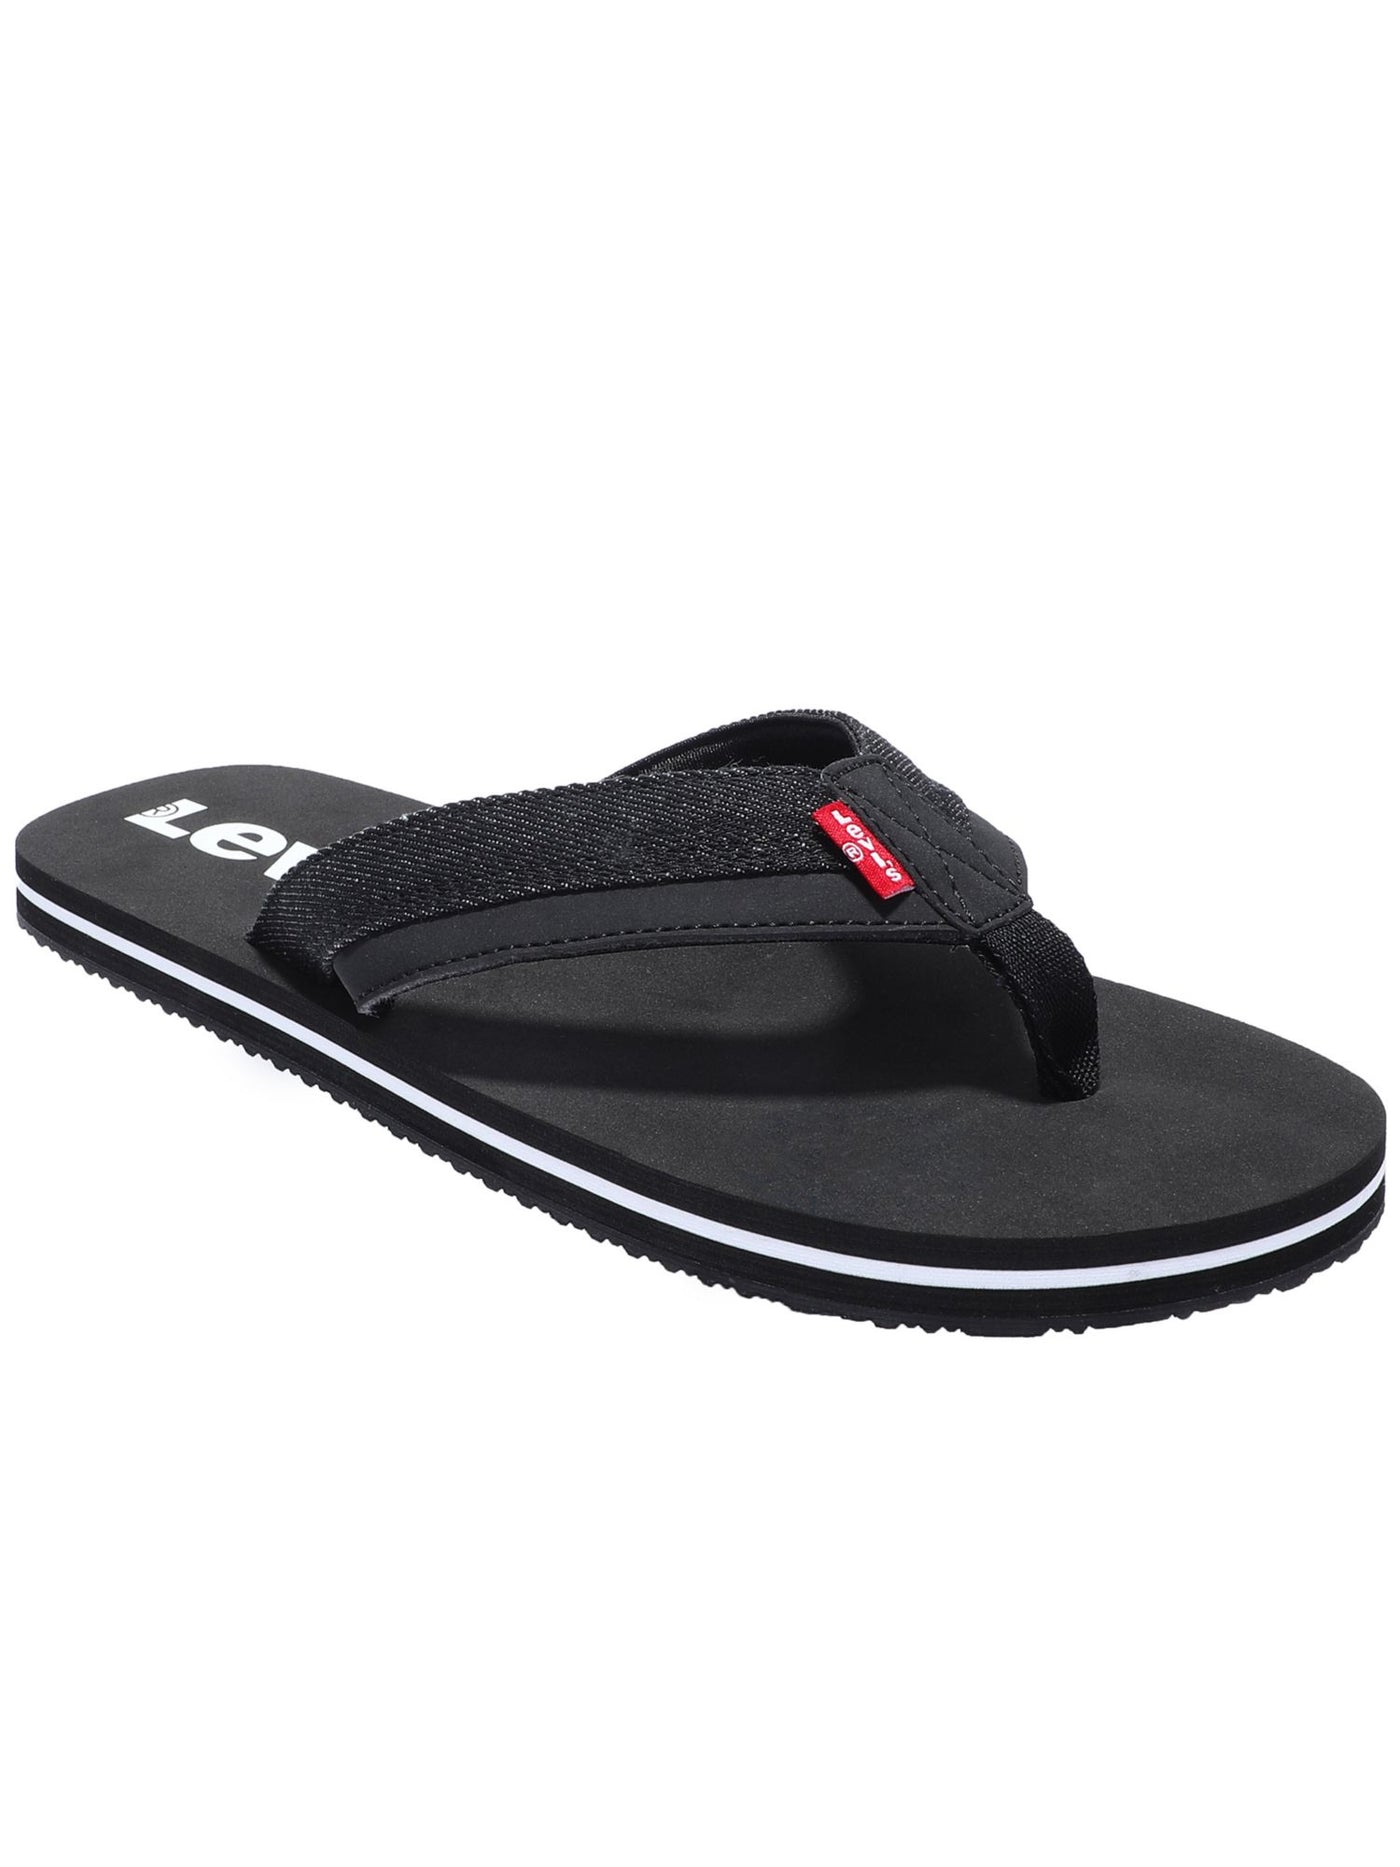 LEVI'S Mens Black Mixed Media Padded Wordmark Round Toe Slip On Thong Sandals Shoes 11